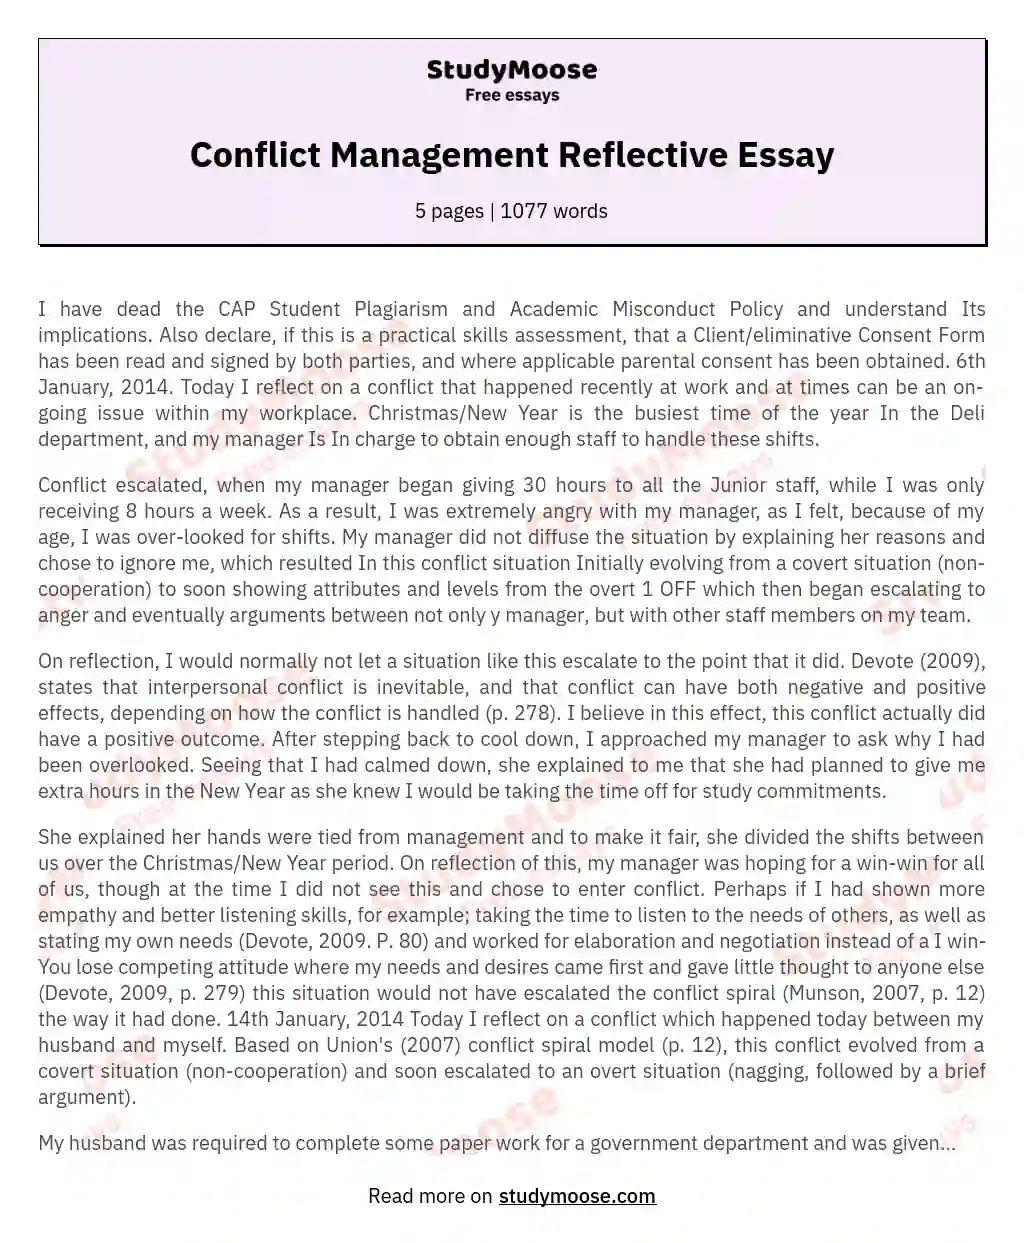 Conflict Management Reflective Essay essay